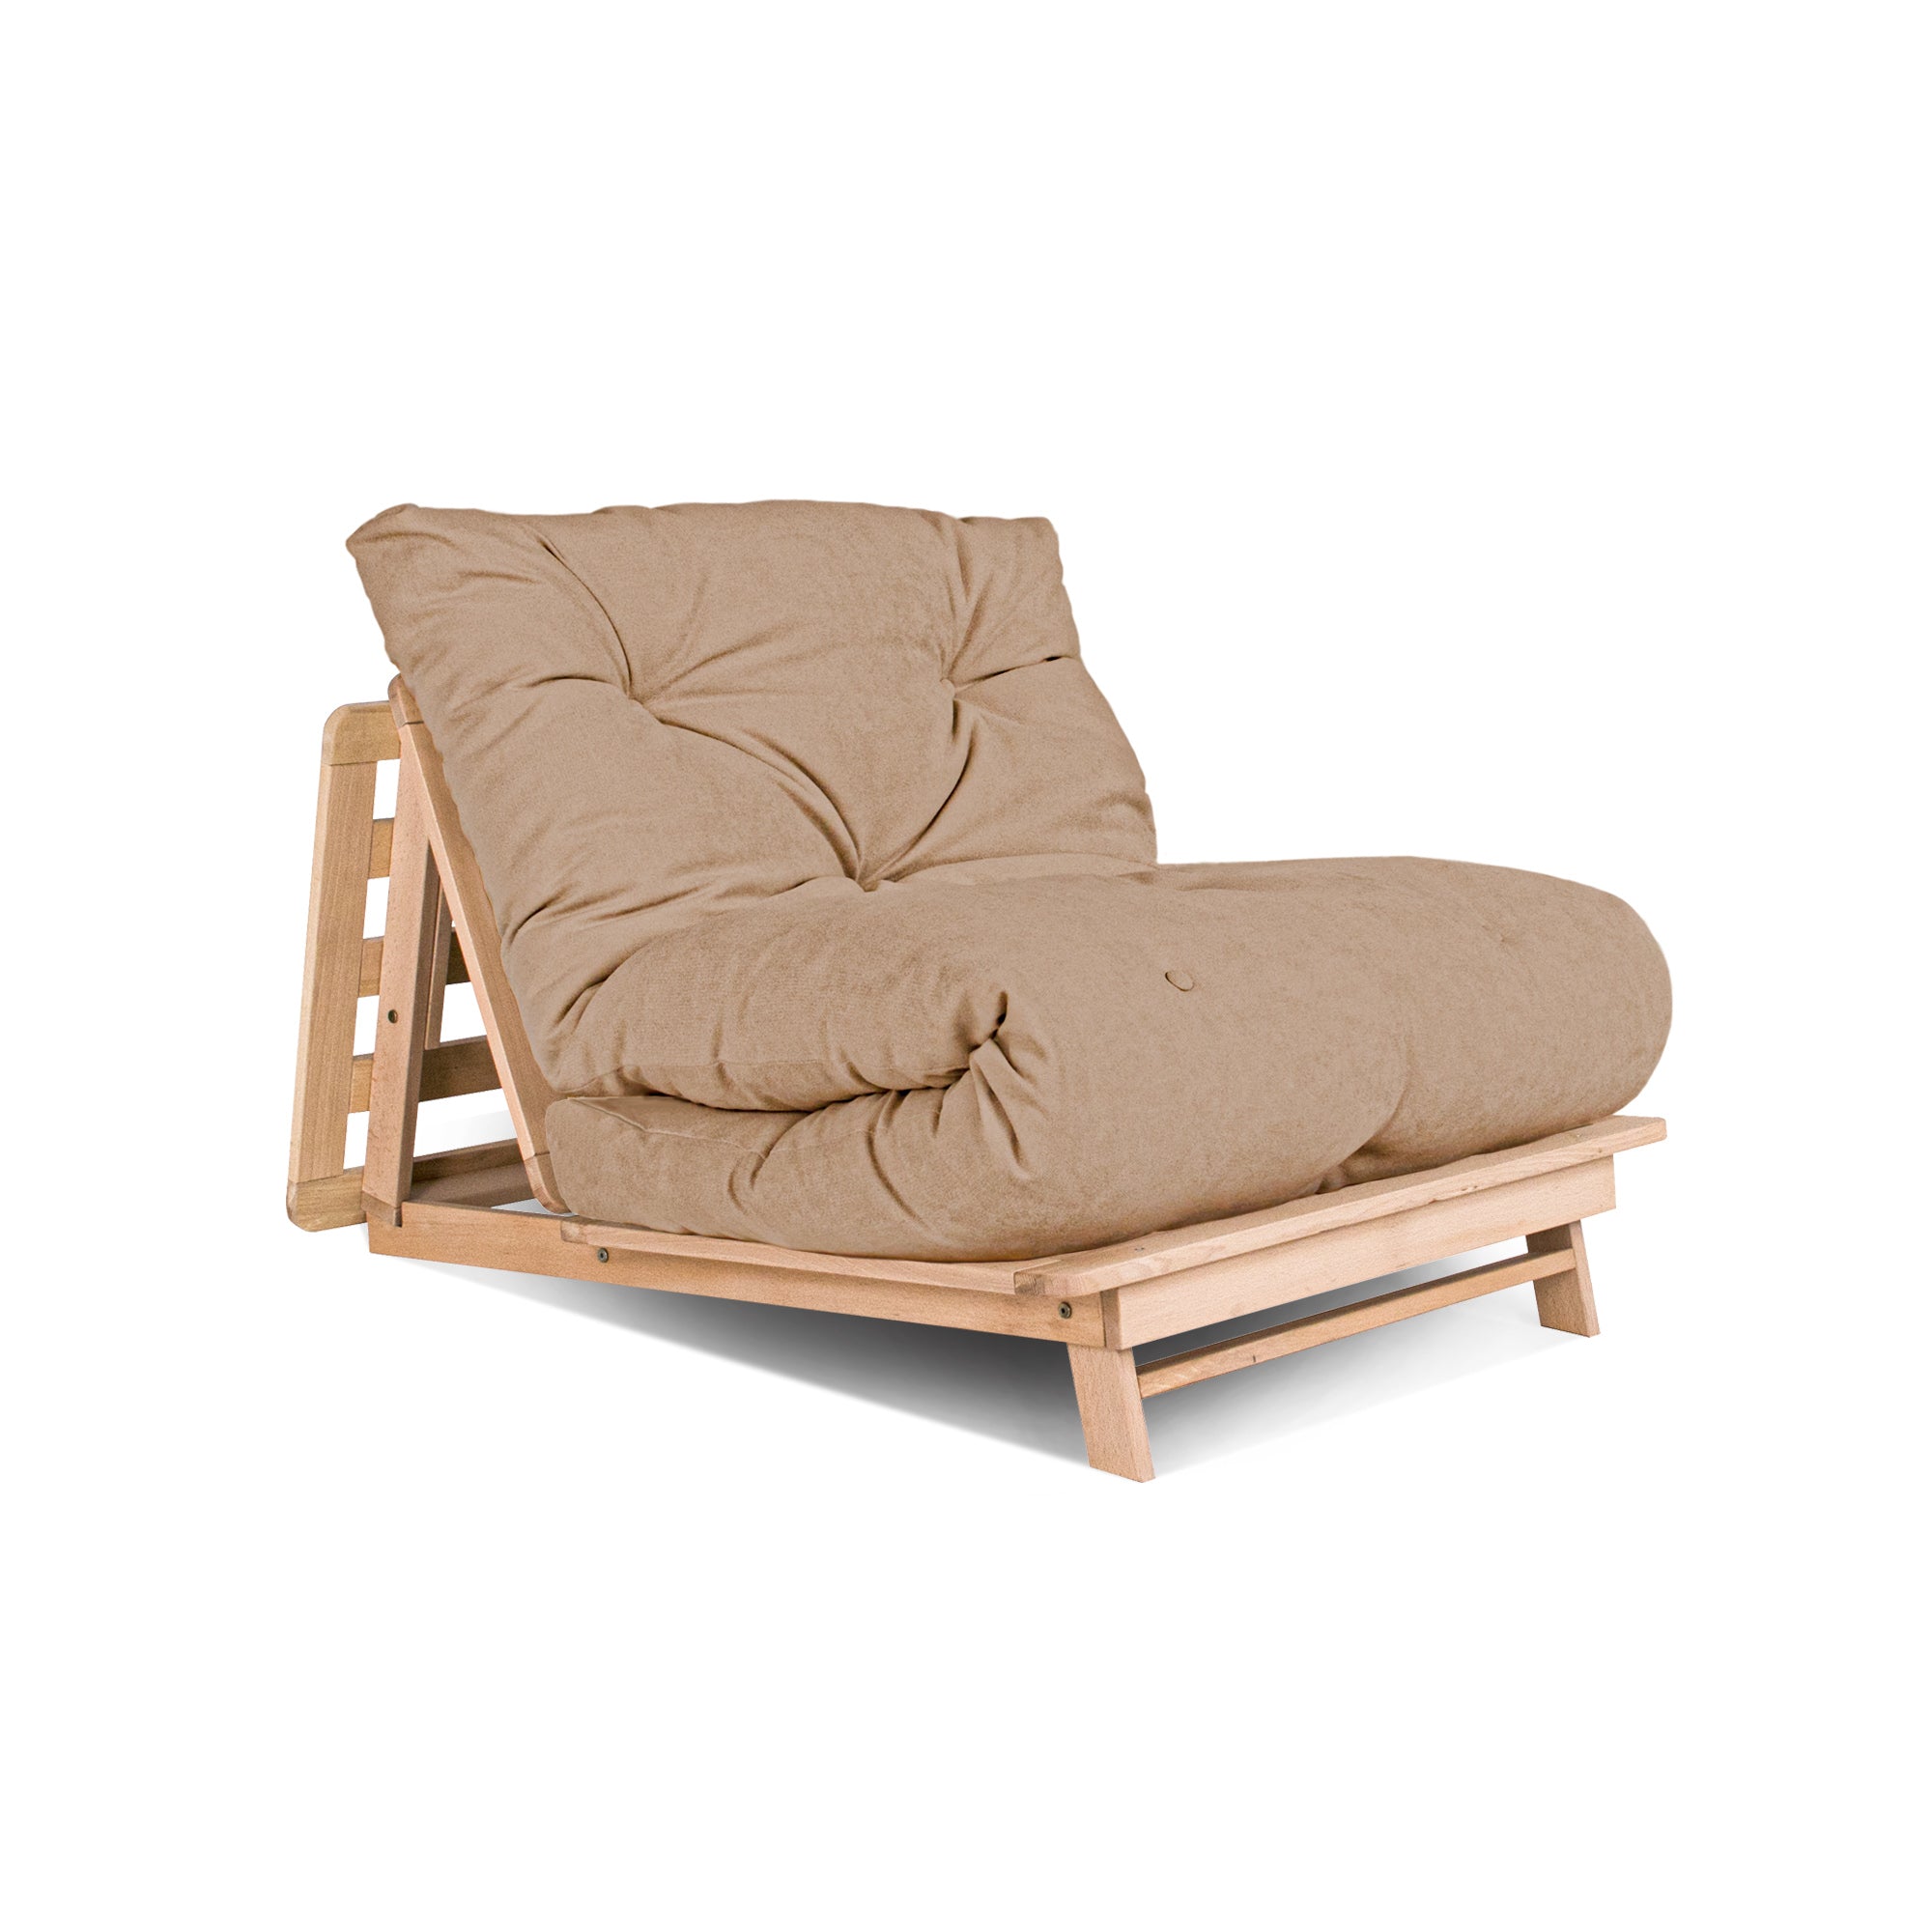 LAYTI-90 Futon Chair, Beech Wood Frame, Natural Colour-beige fabric